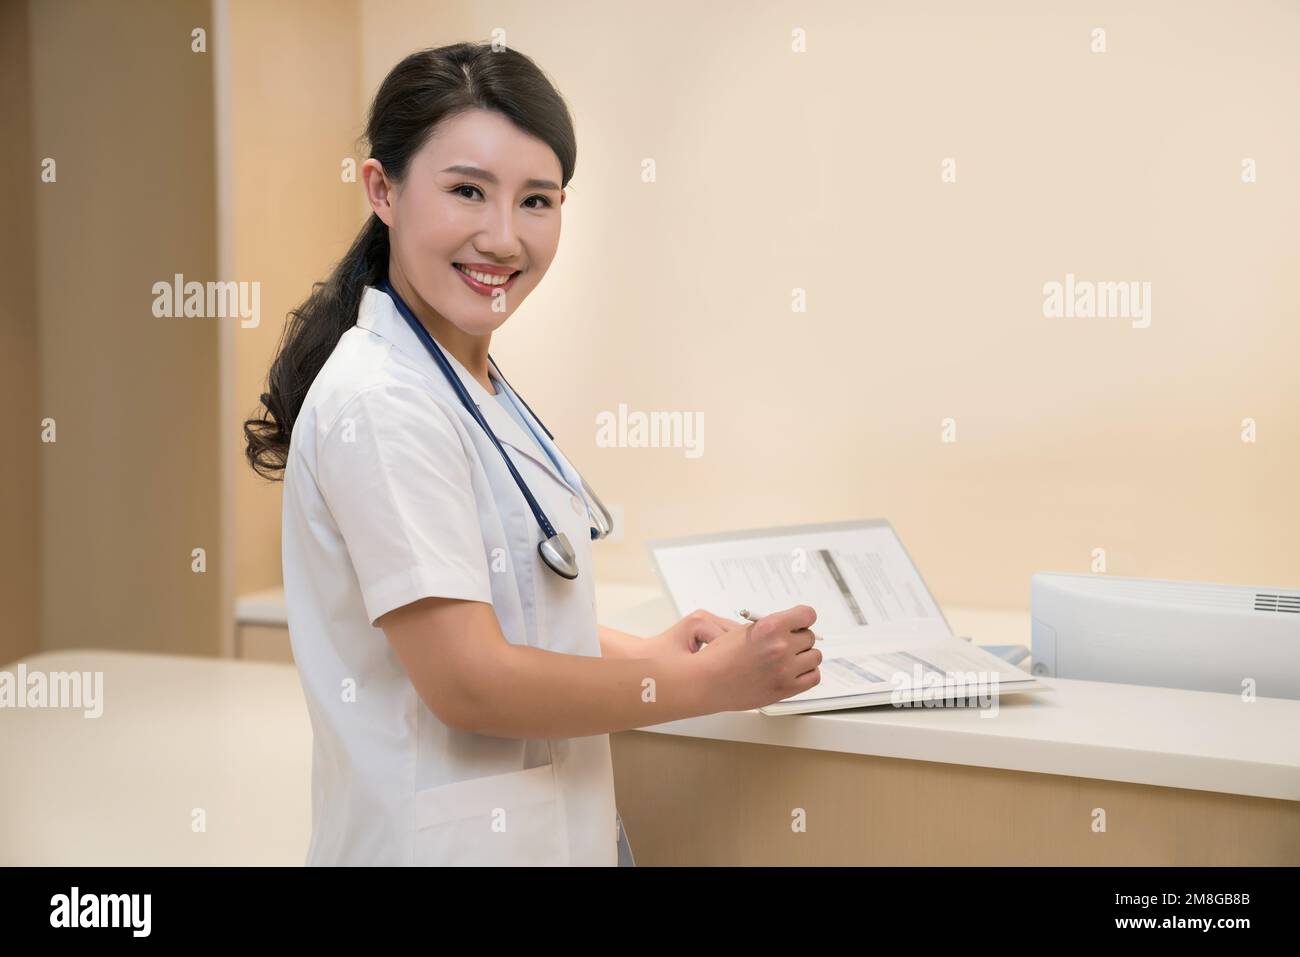 Female doctors portraits Stock Photo